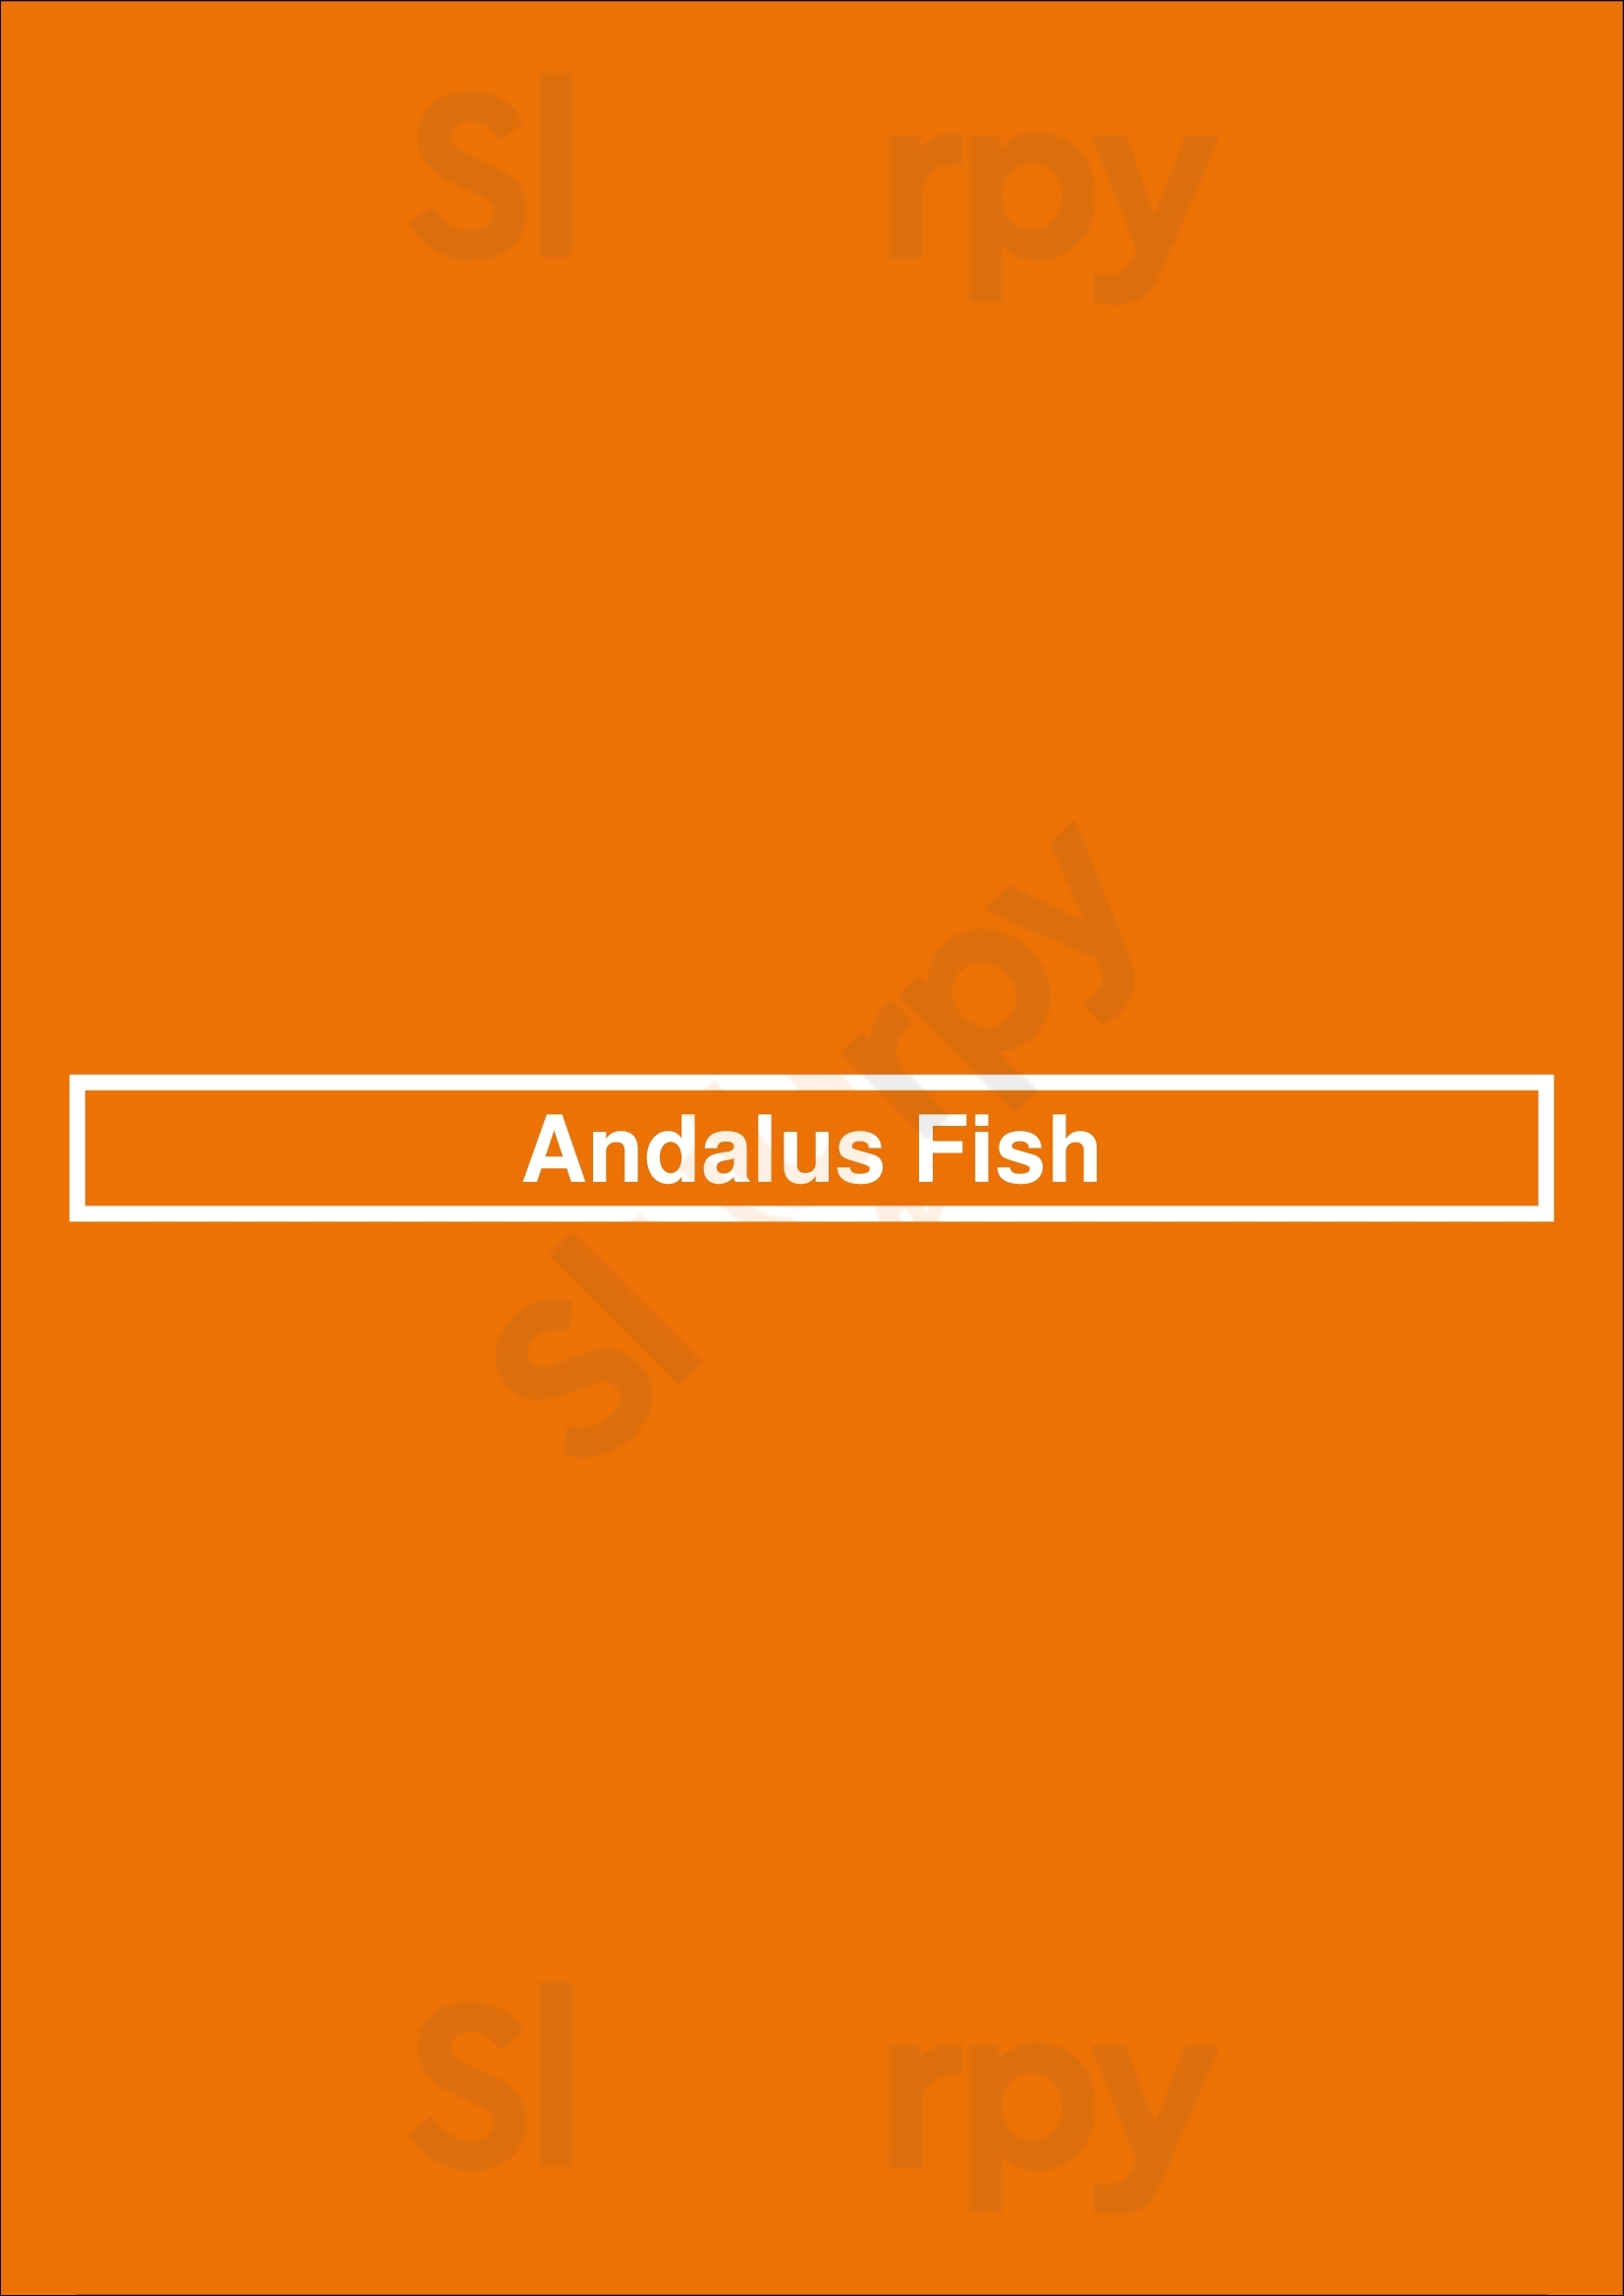 Andalus Fish Rotterdam Menu - 1